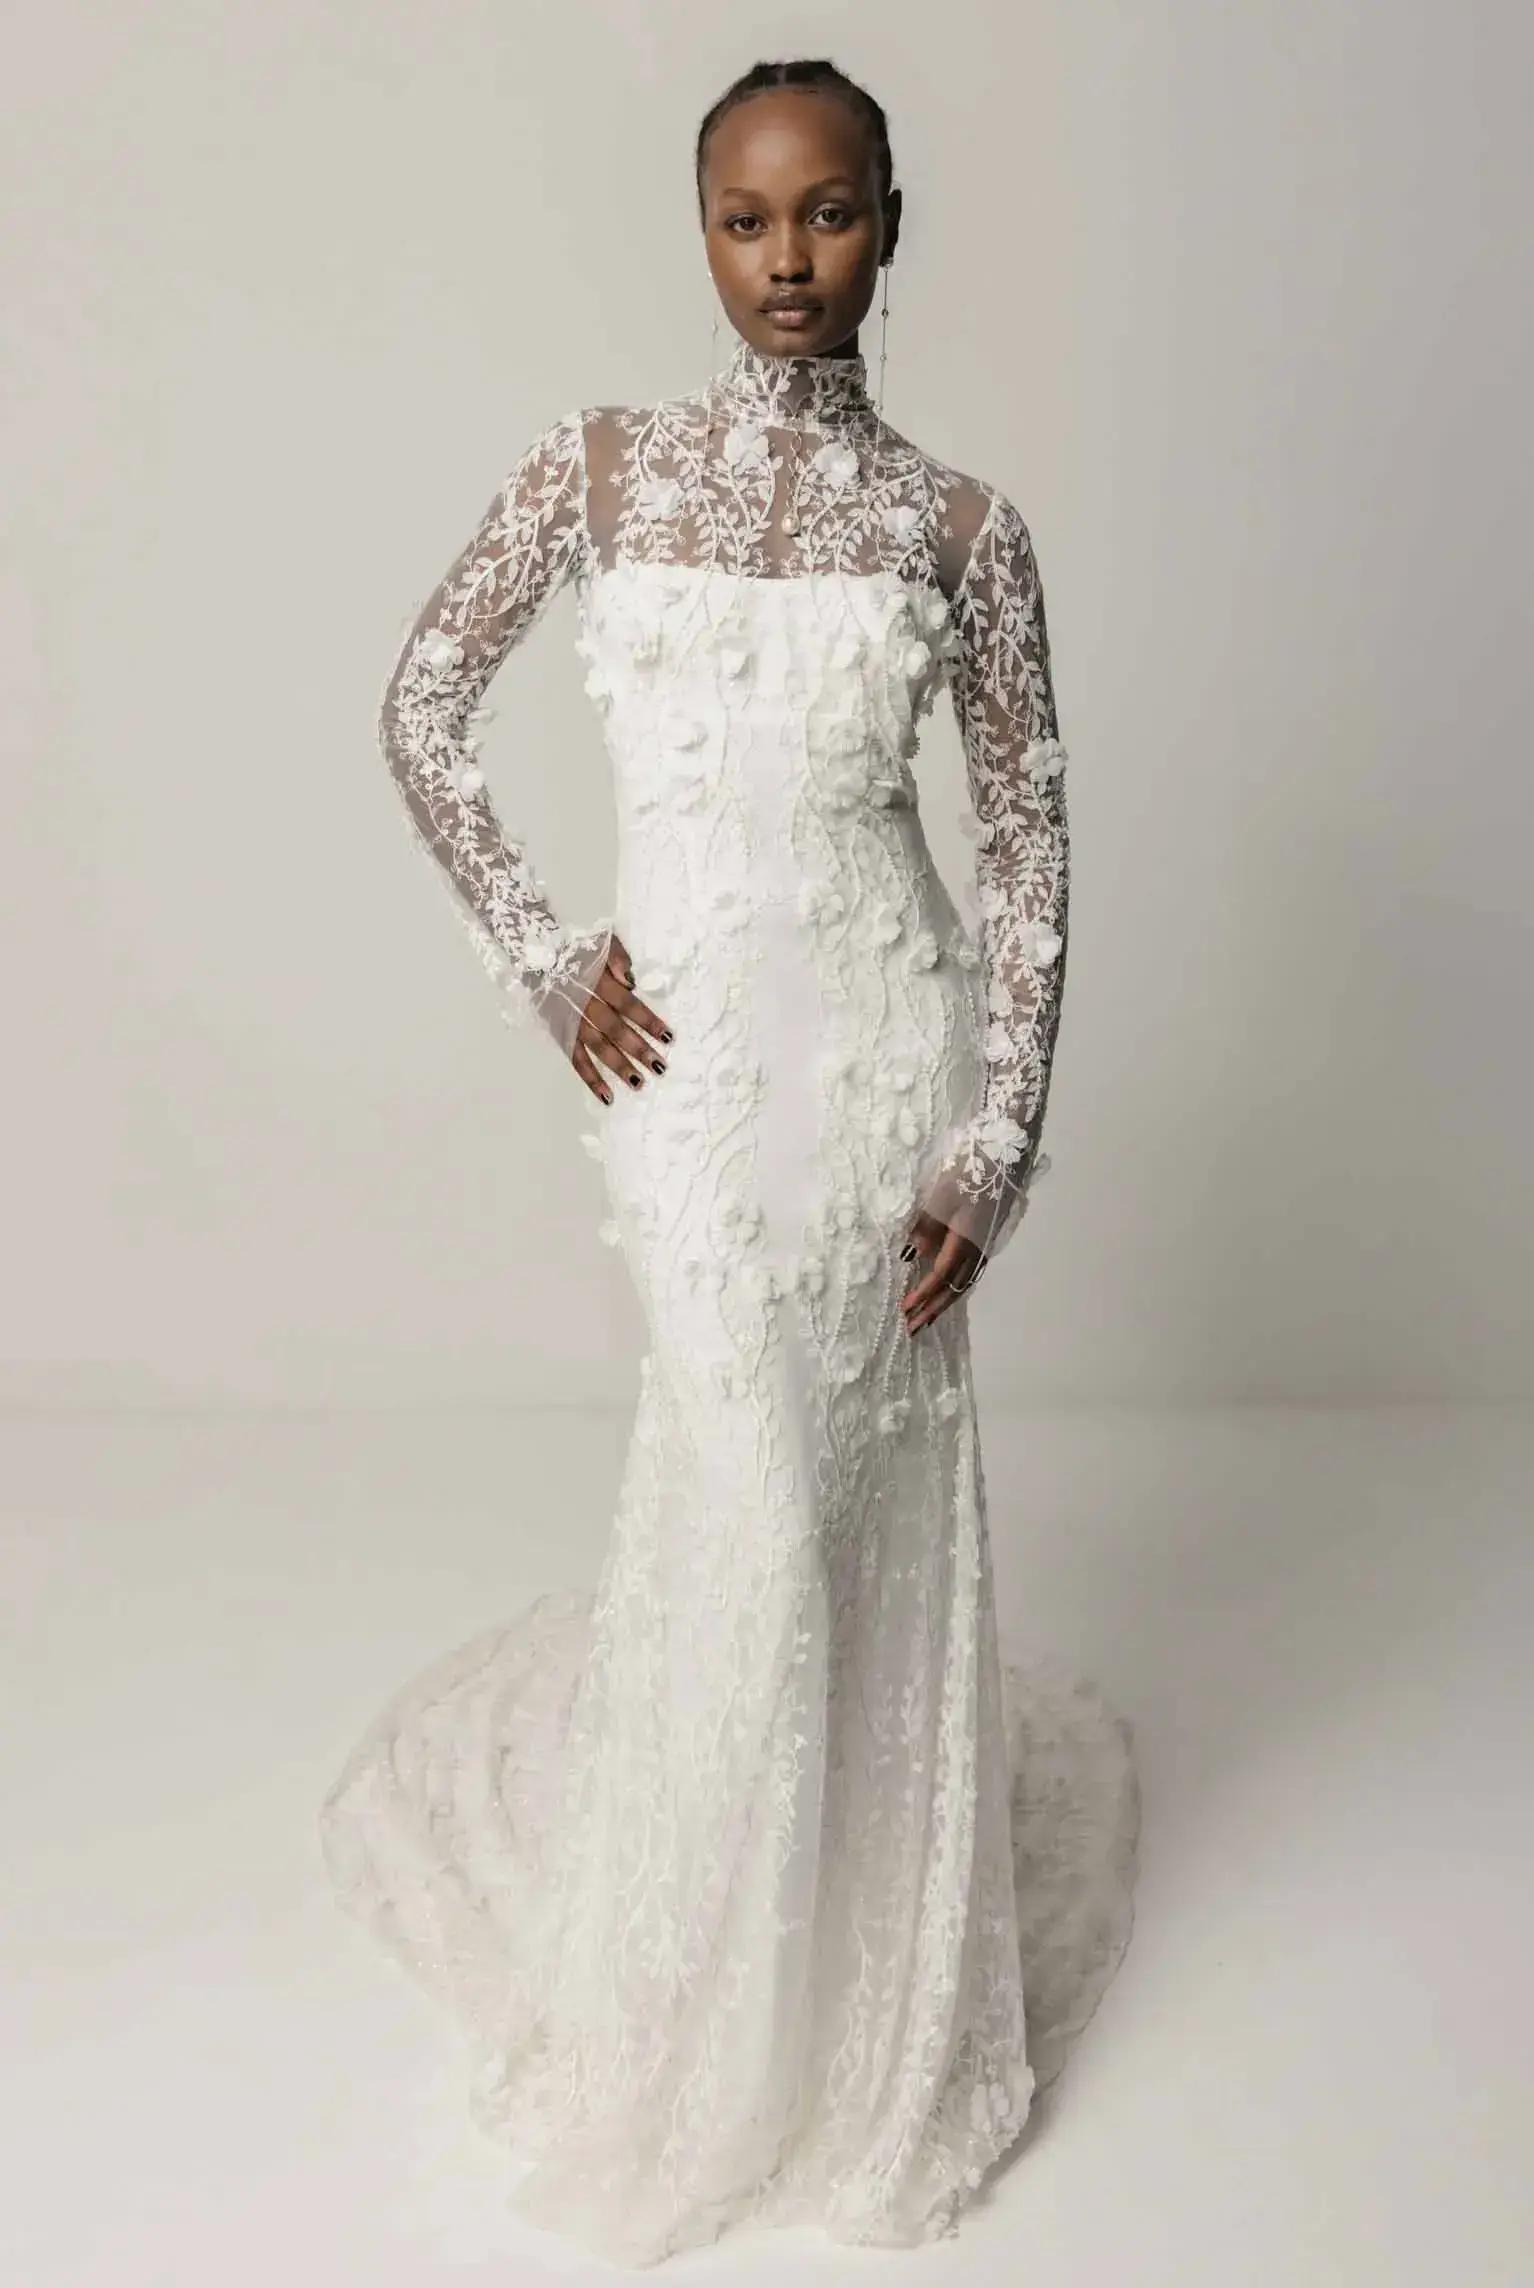 Saint Bridal Couture: Where Classic Silhouettes Meet Contemporary Design Image